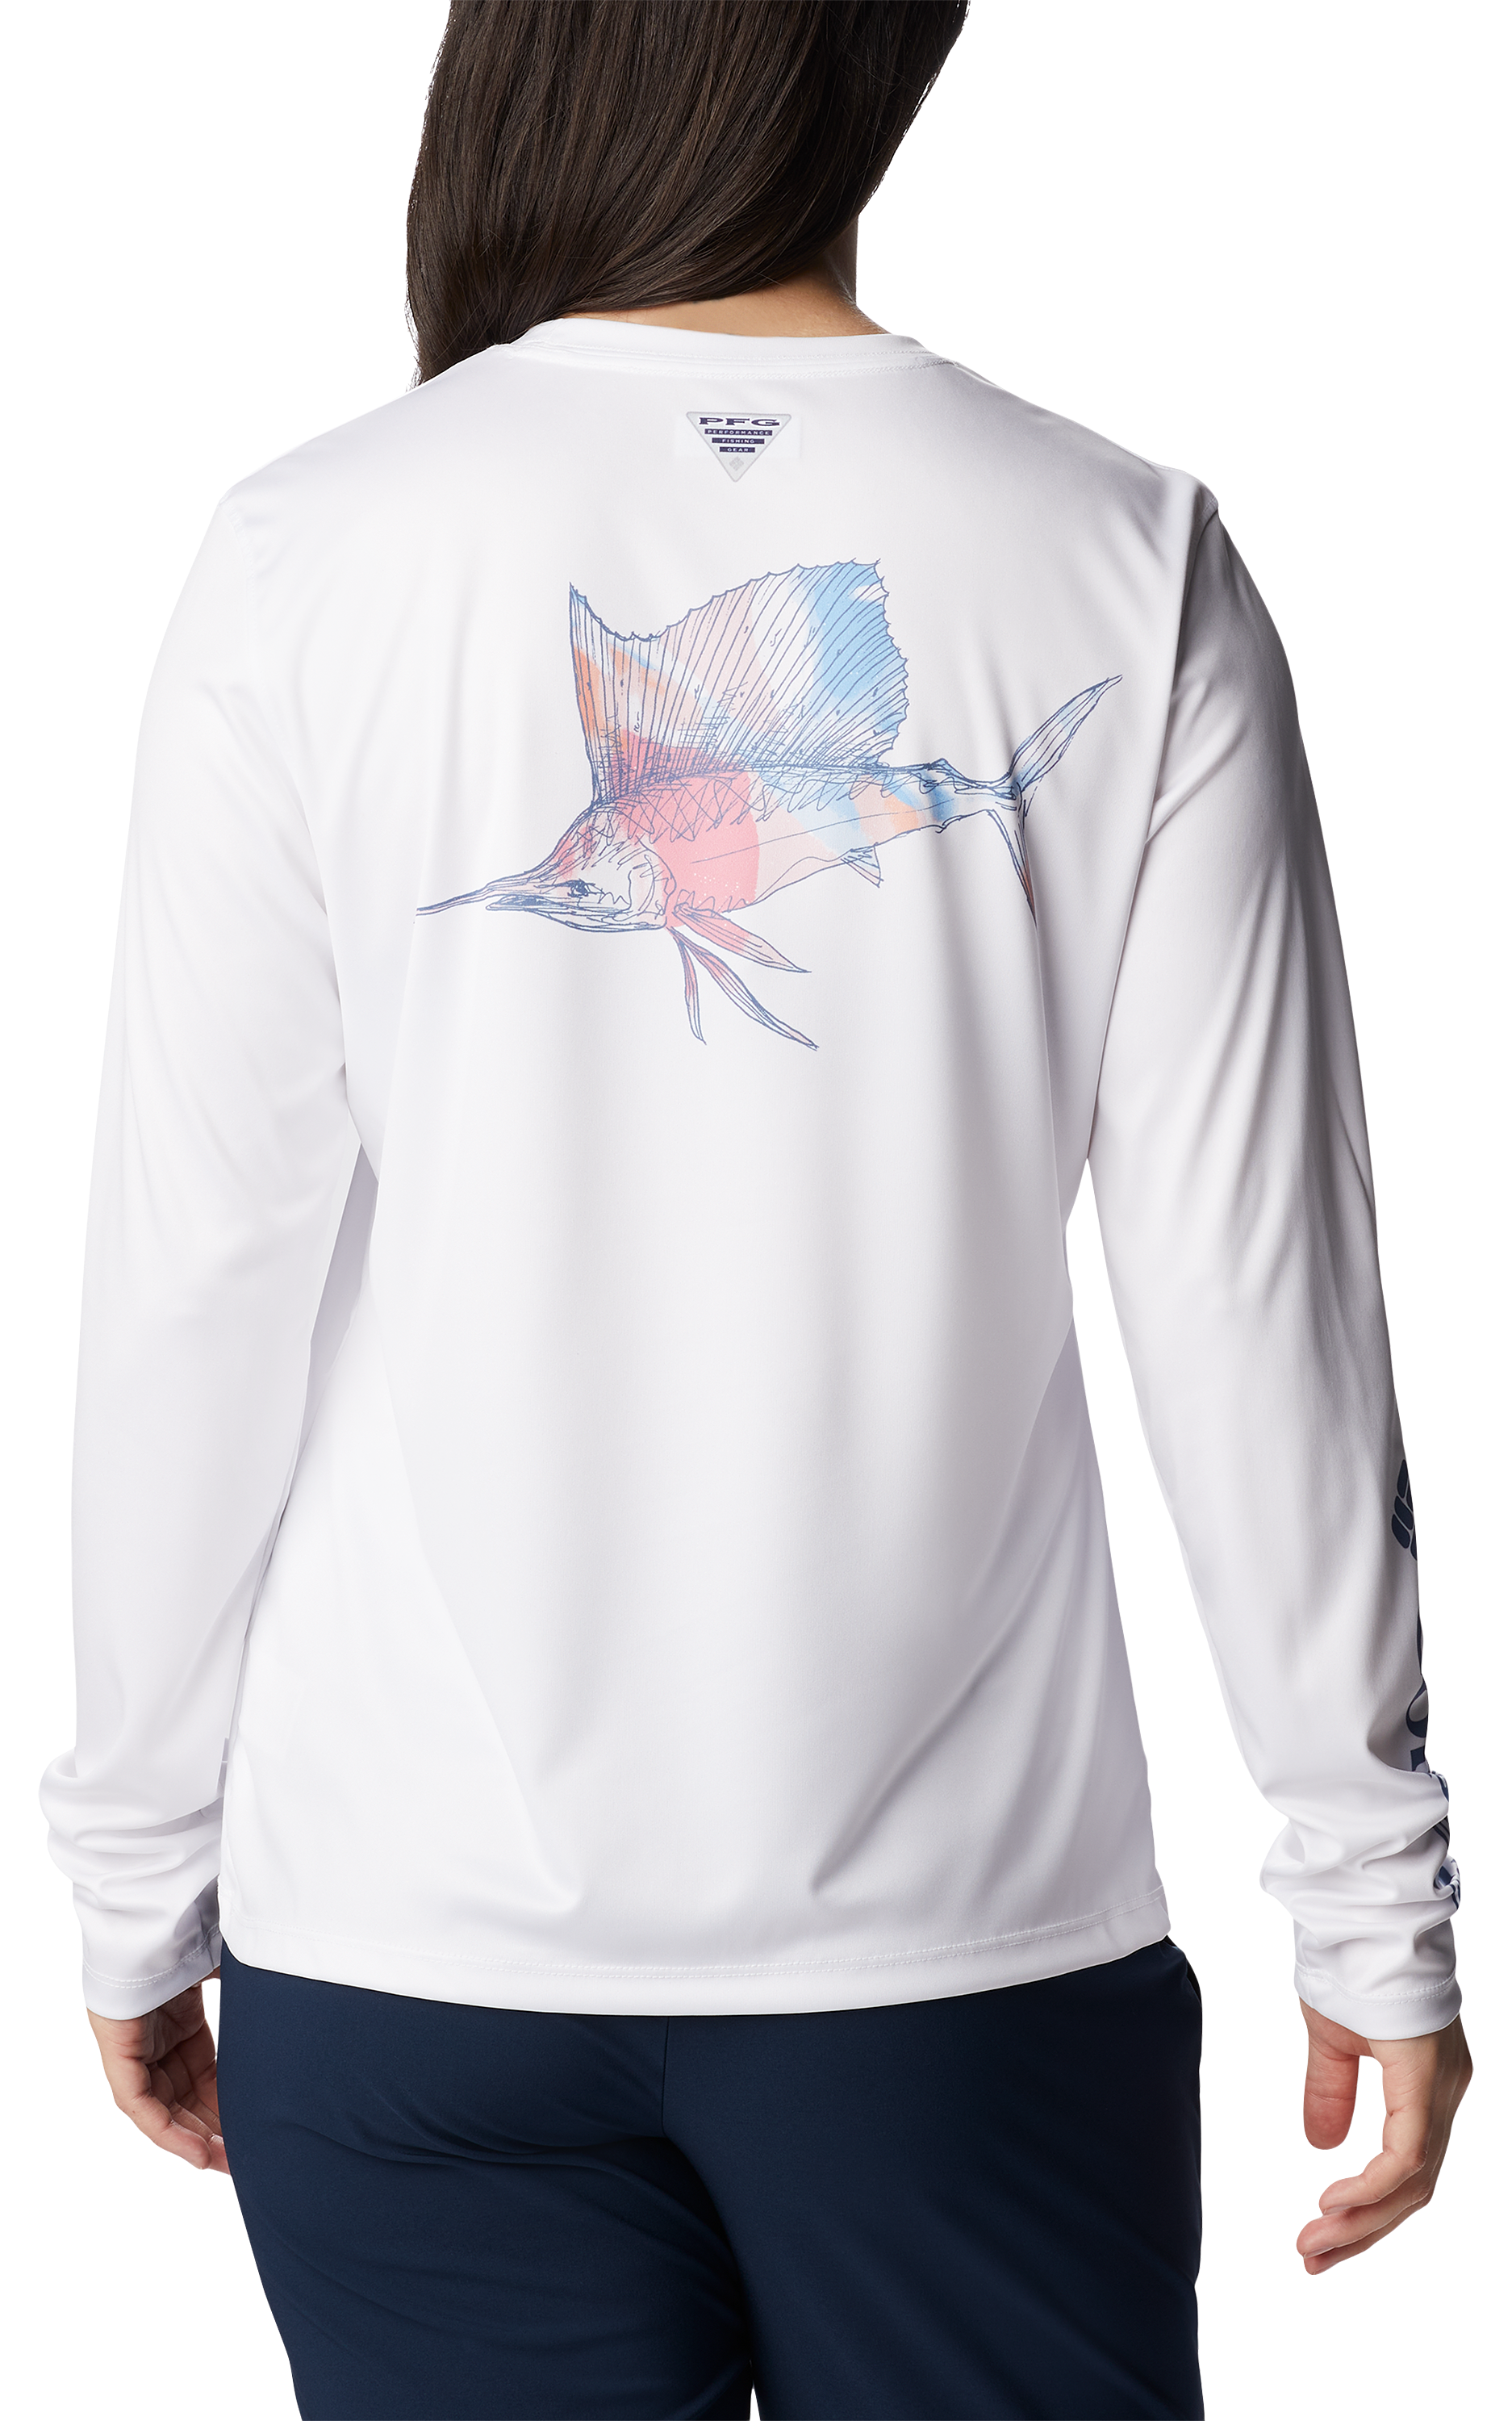 Columbia Women's PFG Tidal Tee Sailfish Flair Long Sleeve Shirt - XL - White